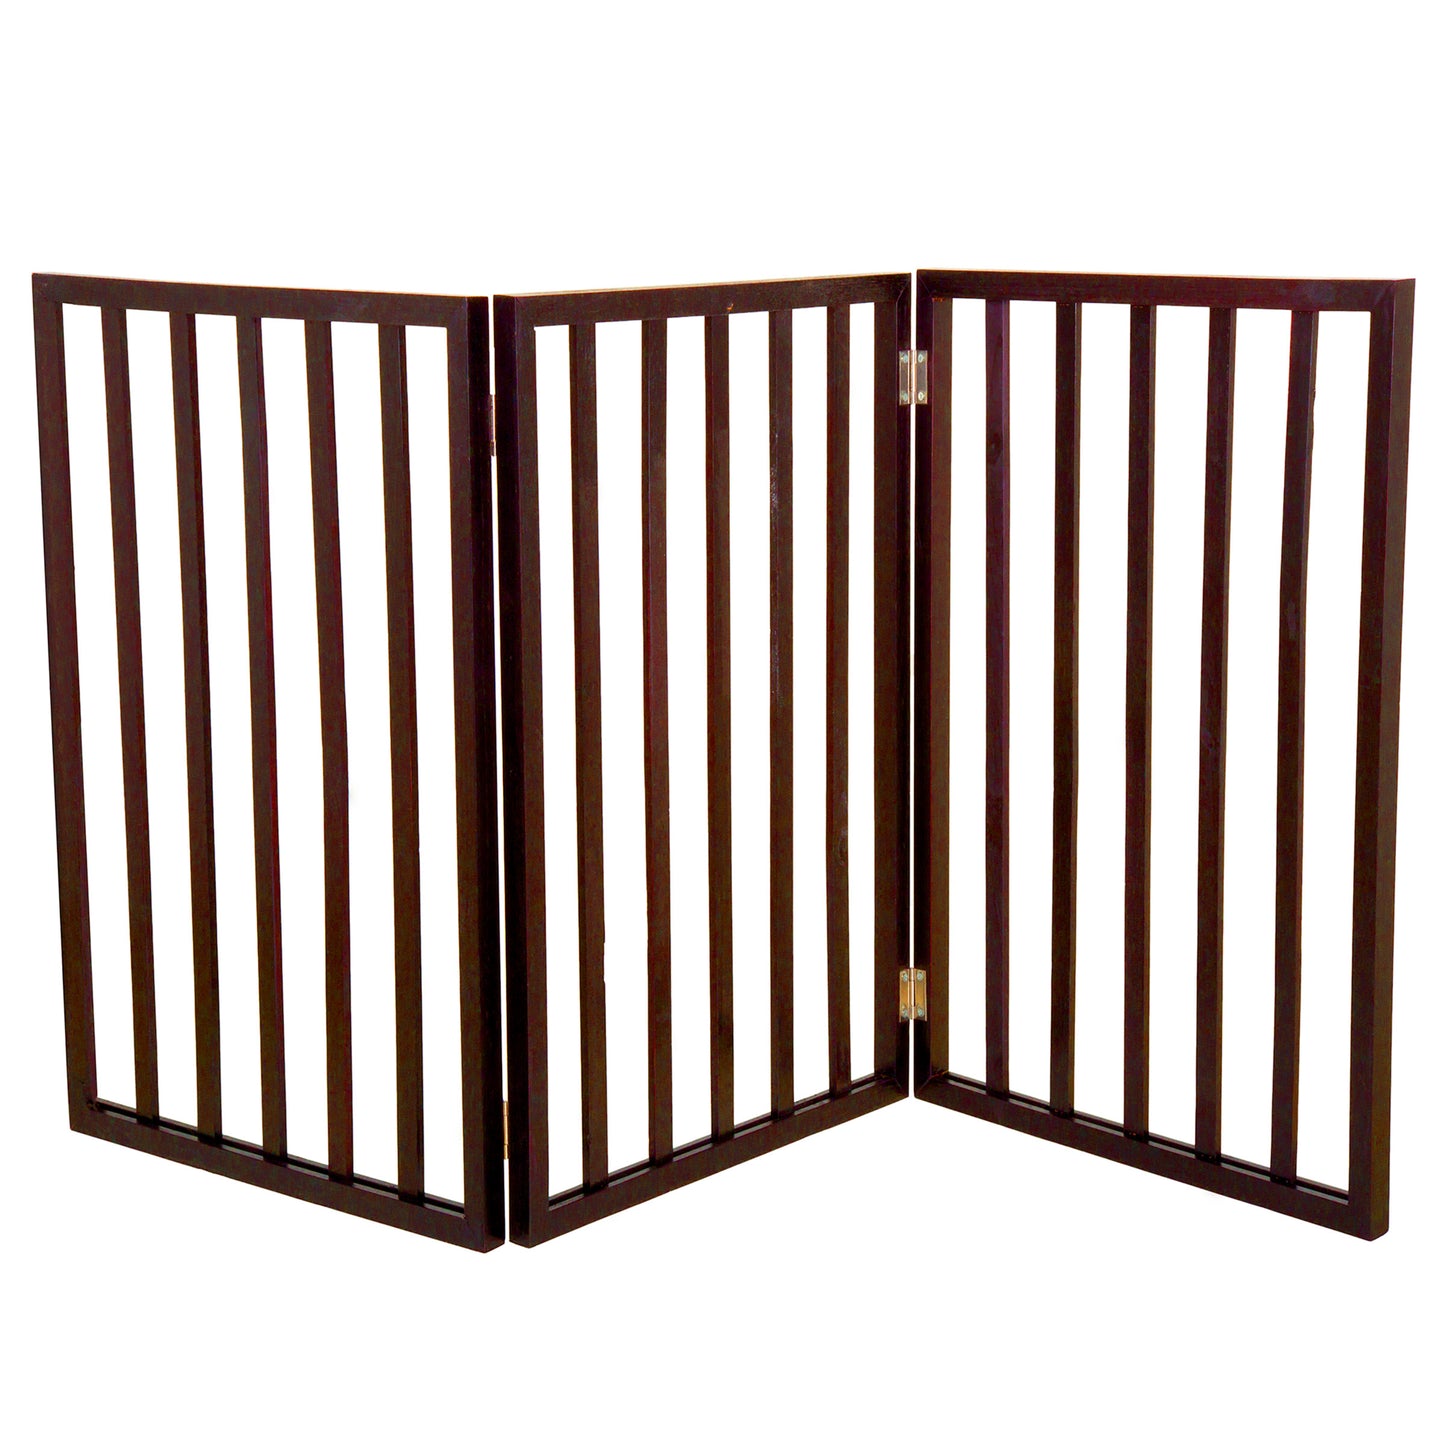 PETMAKER 3-Panel Foldable Pet Gate, Brown